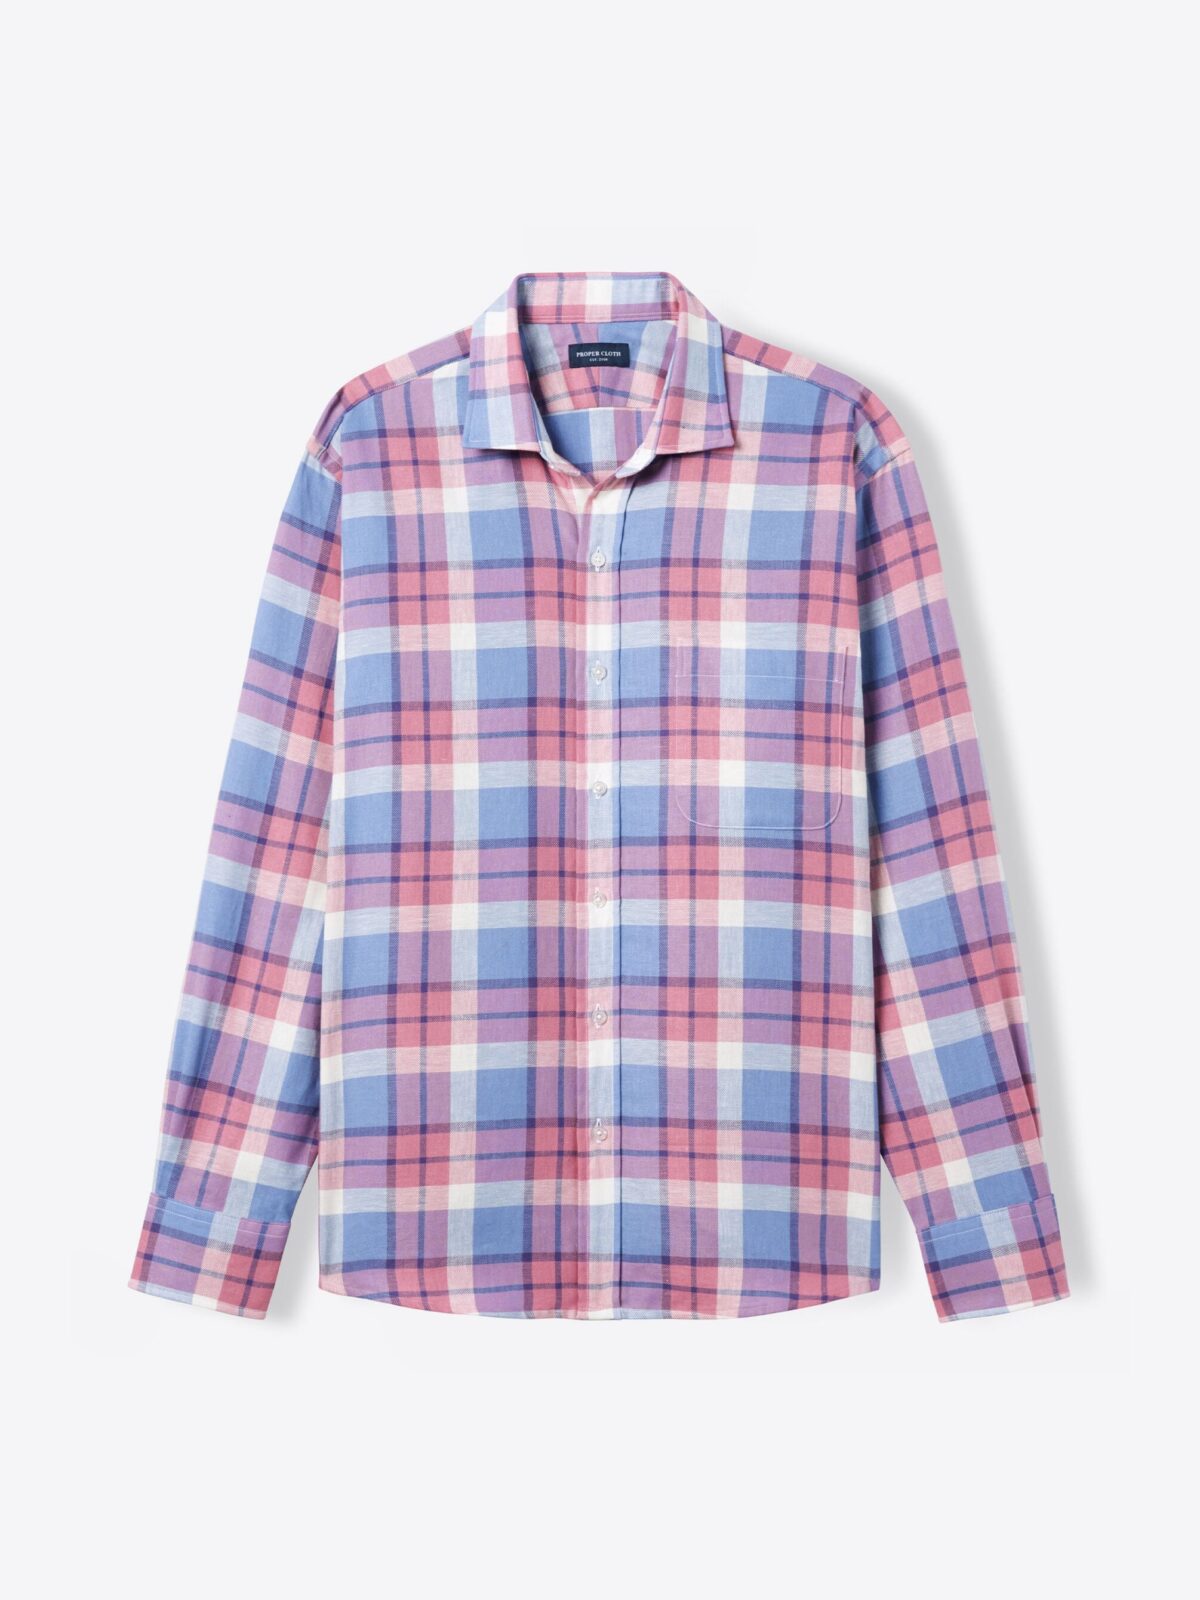 Mesa Rose and Blue Cotton Linen Plaid Shirt by Proper Cloth